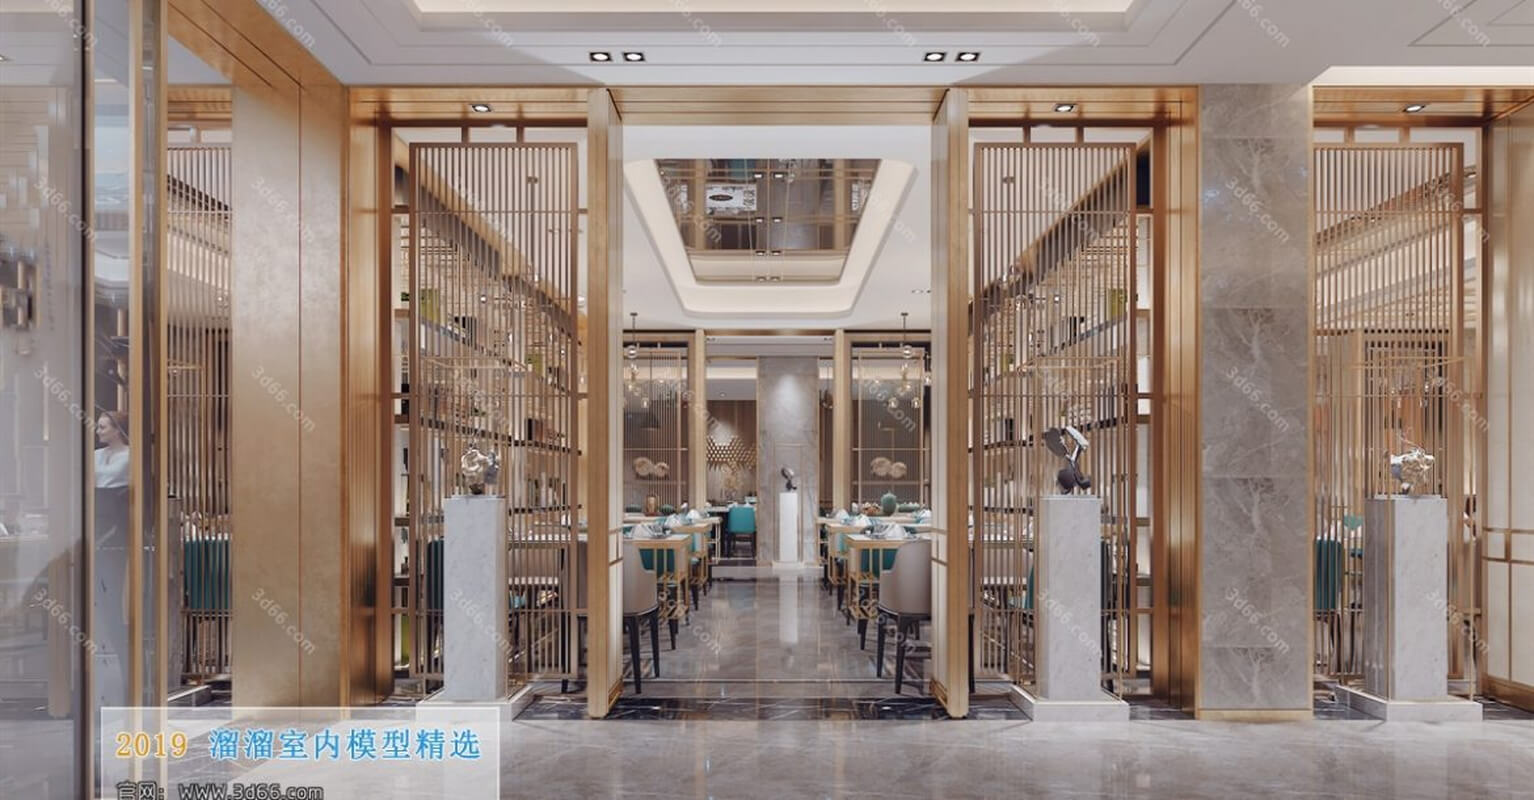 3D66 Hotel & Teahouse & Cafe Interior 2019 Style (04)